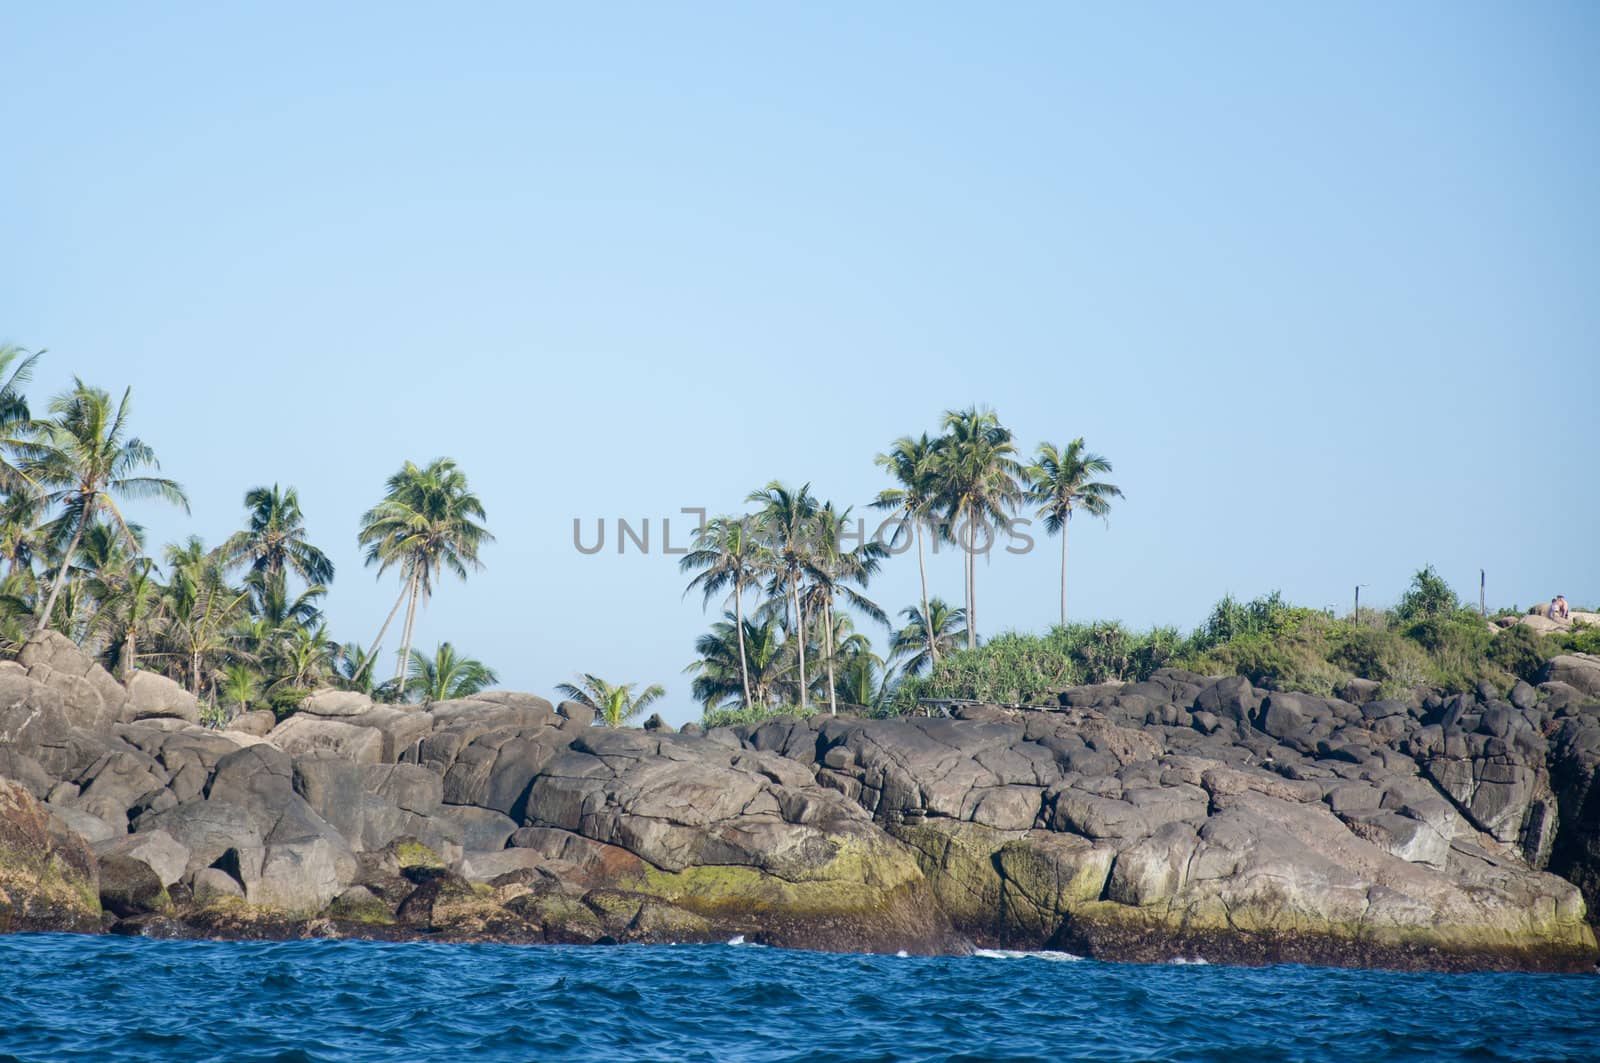 The rocks and seashore of Unawatuna, Sri Lanka by kdreams02